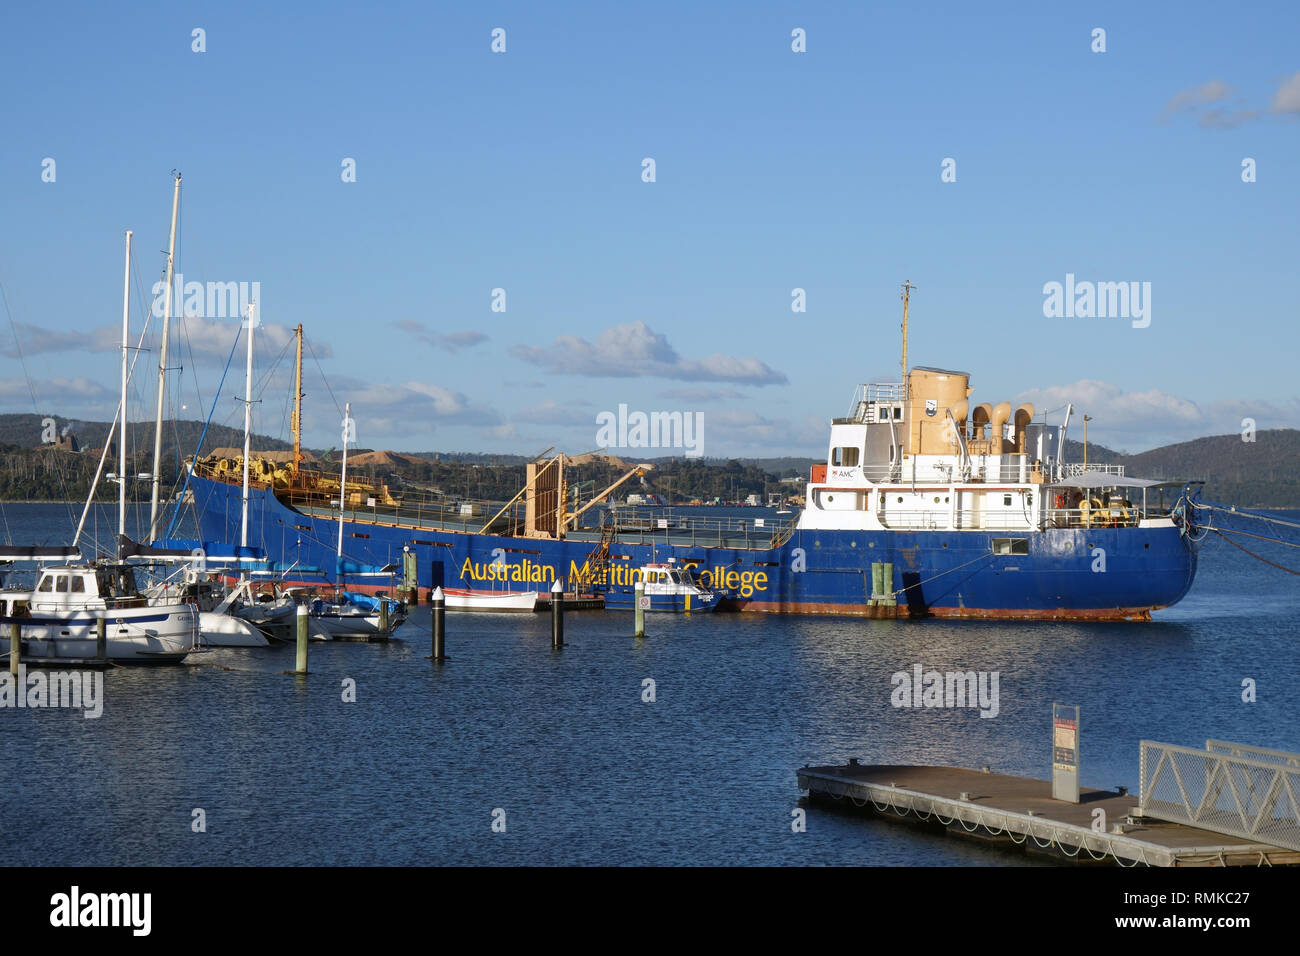 The Australian Maritime College's training ship at the wharf at Beauty Point, Tamar River, Tasmania, Australia. No PR Stock Photo